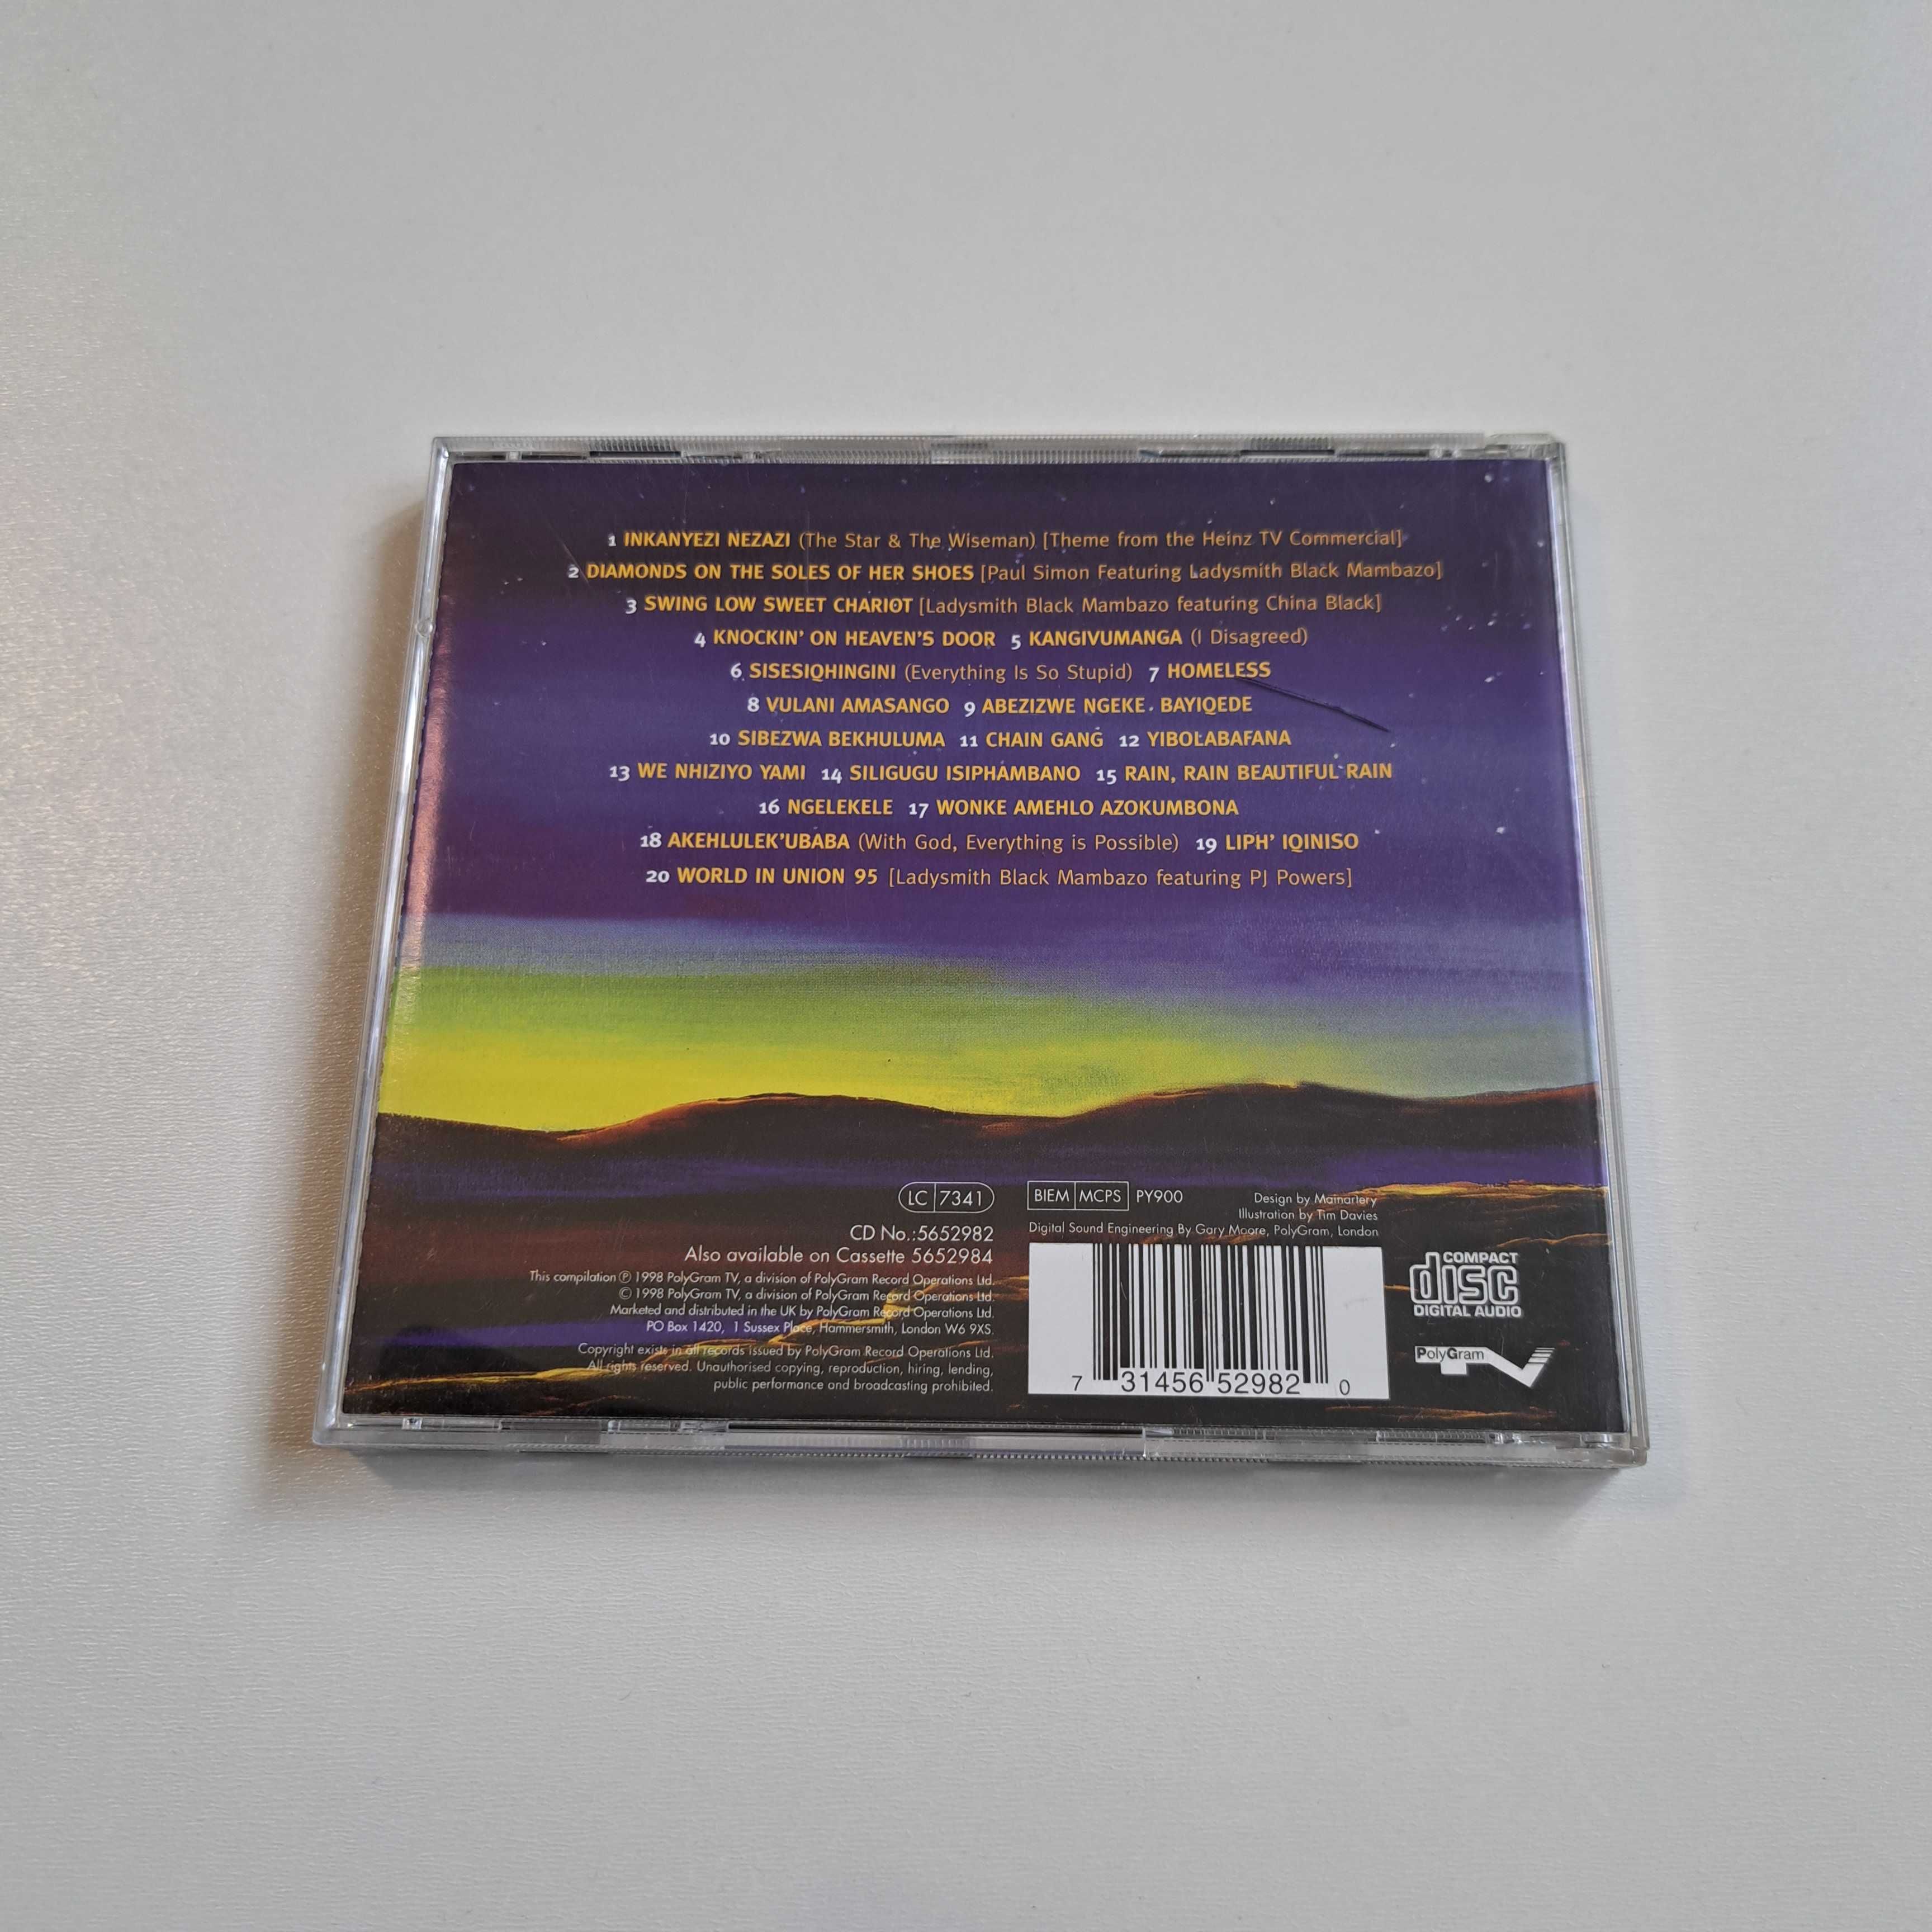 Płyta CD  Ladysmith Black Mambazo - The best of  nr617